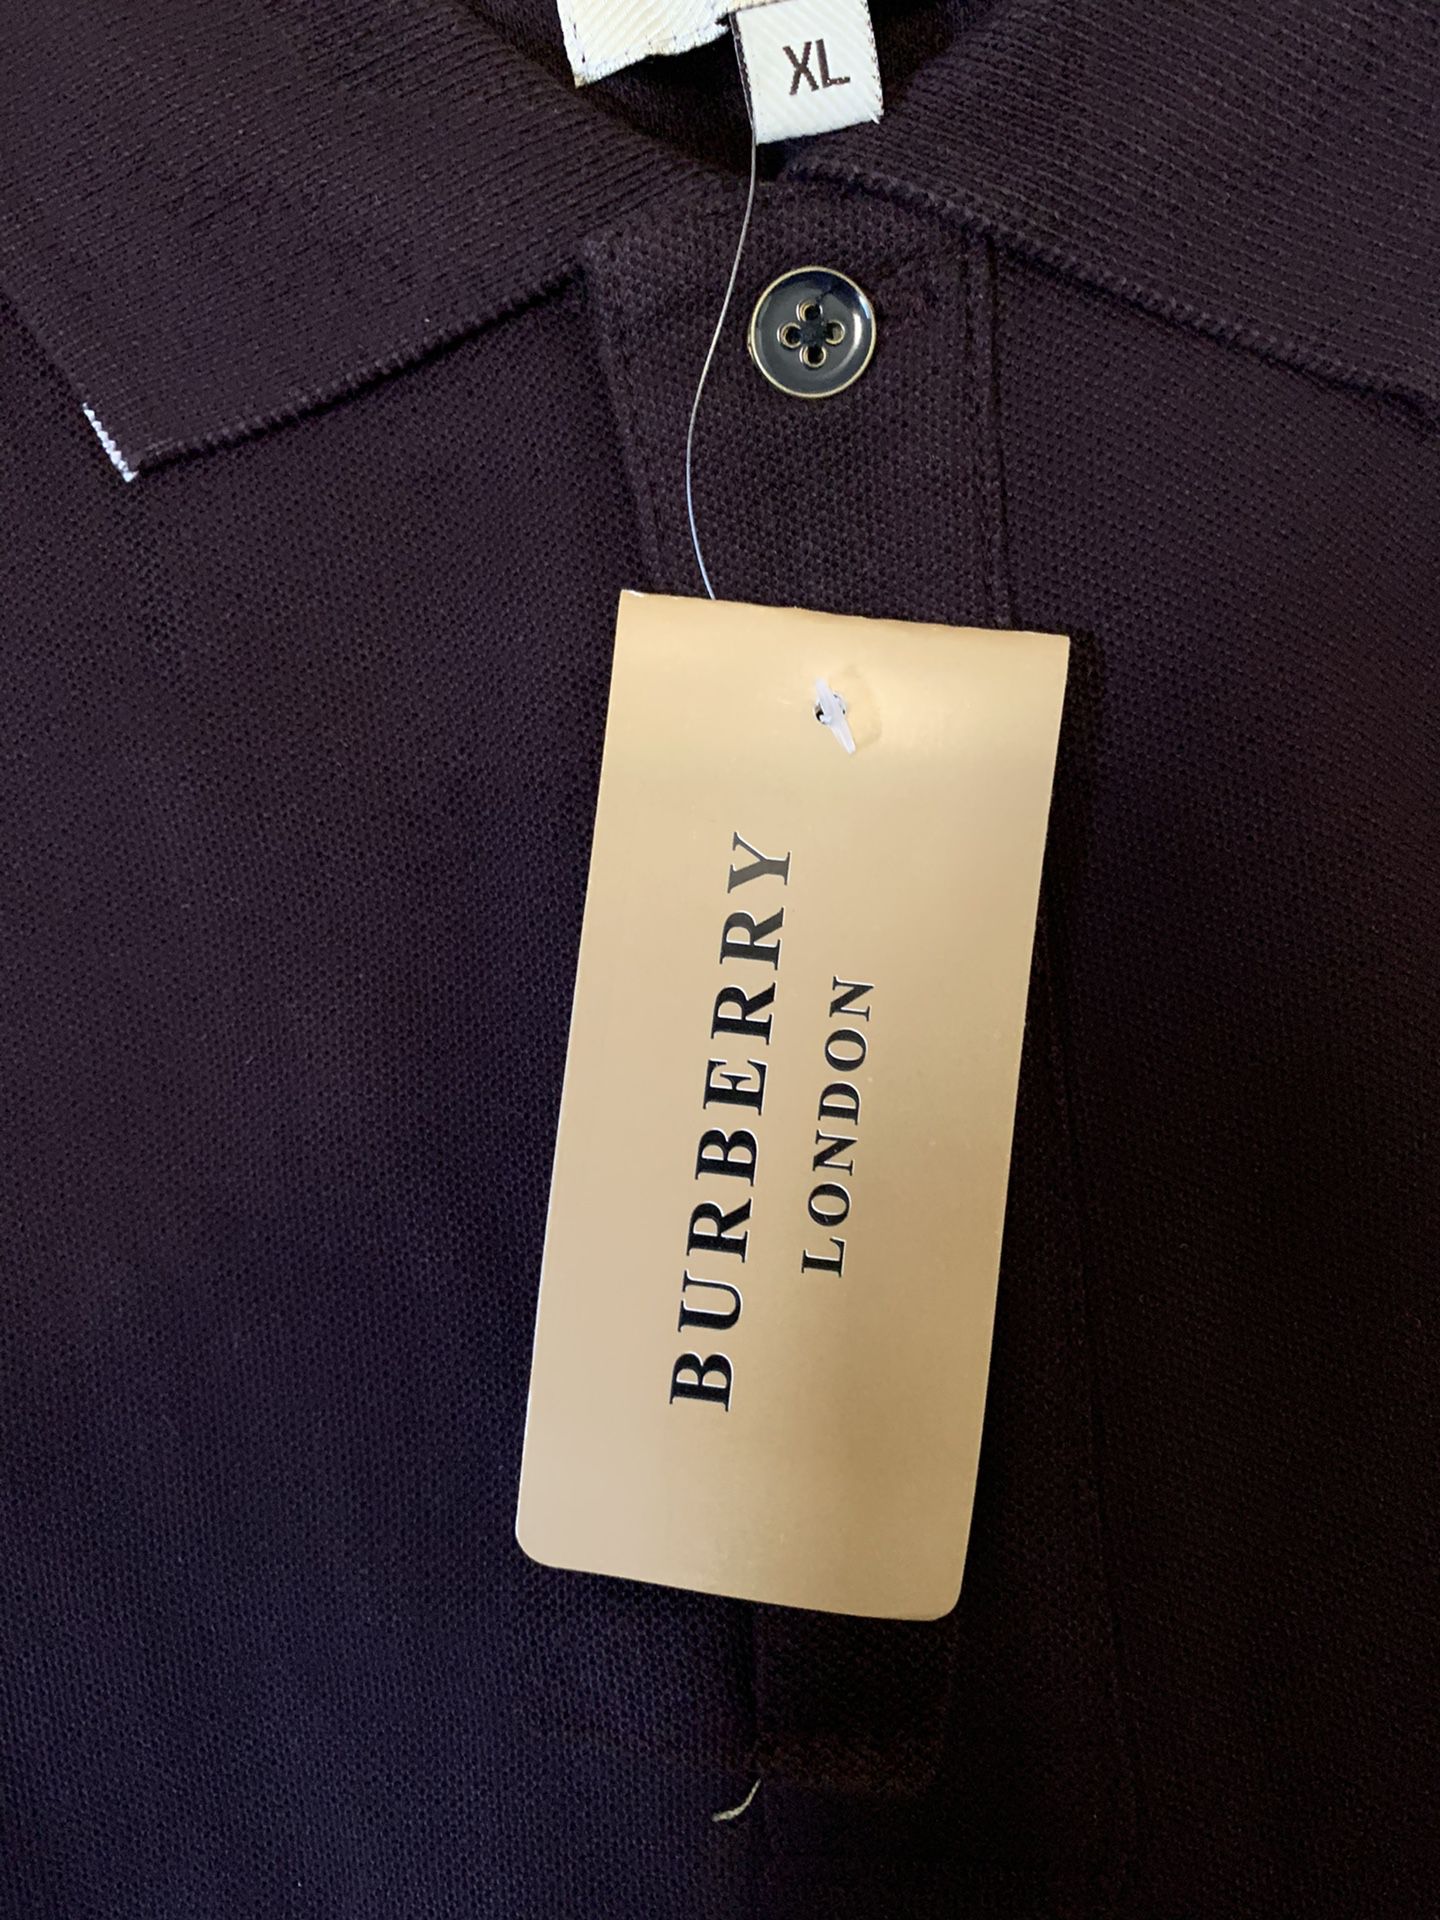 Burberry London Men’s polo shirt short sleeves